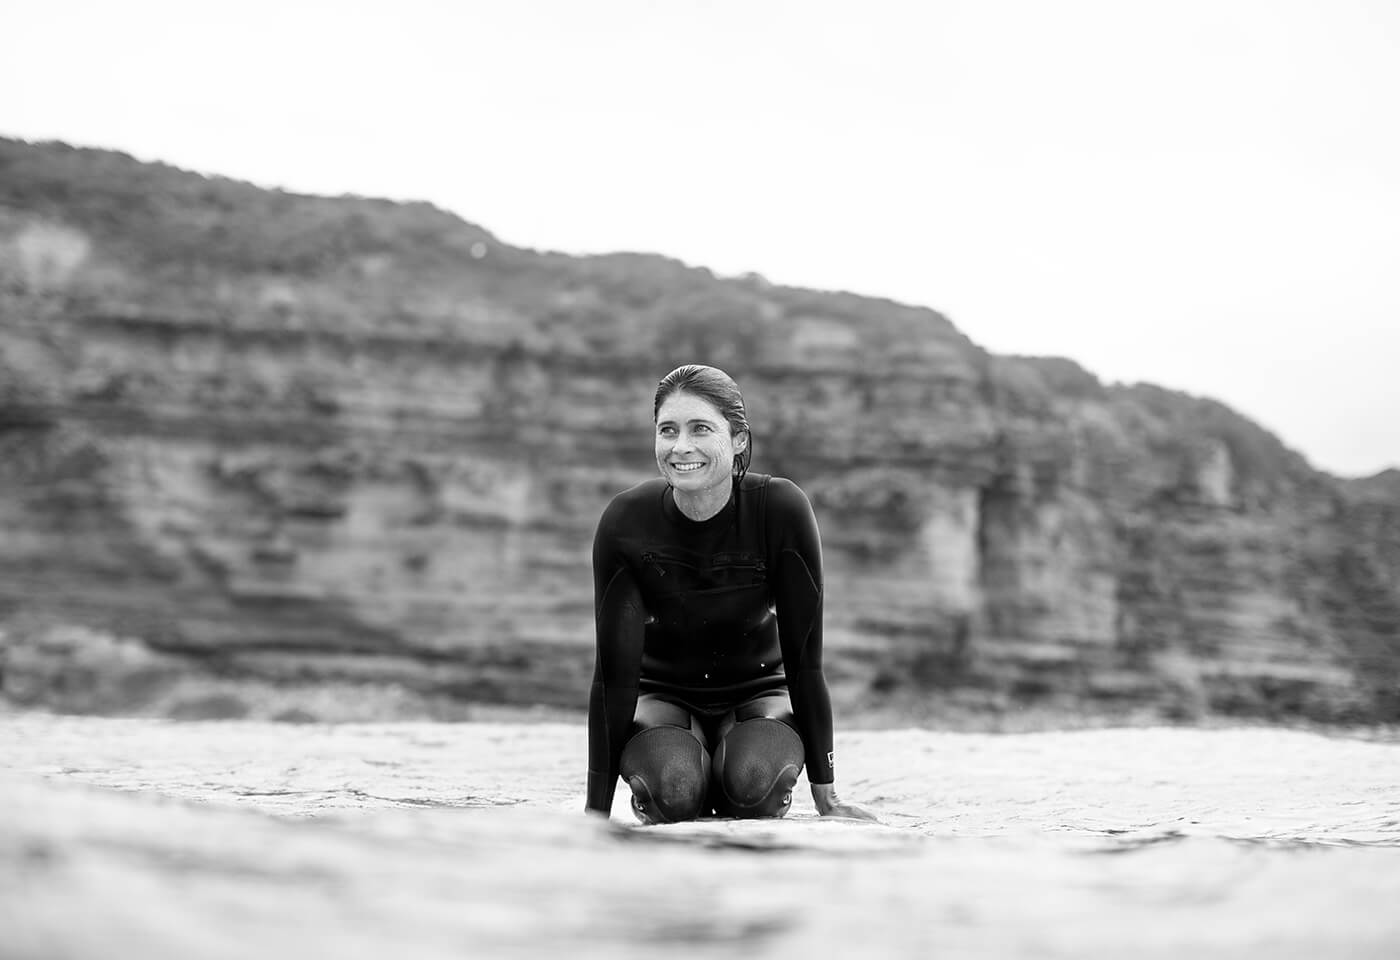 photo of surfer Belinda Baggs by Ed Sloane